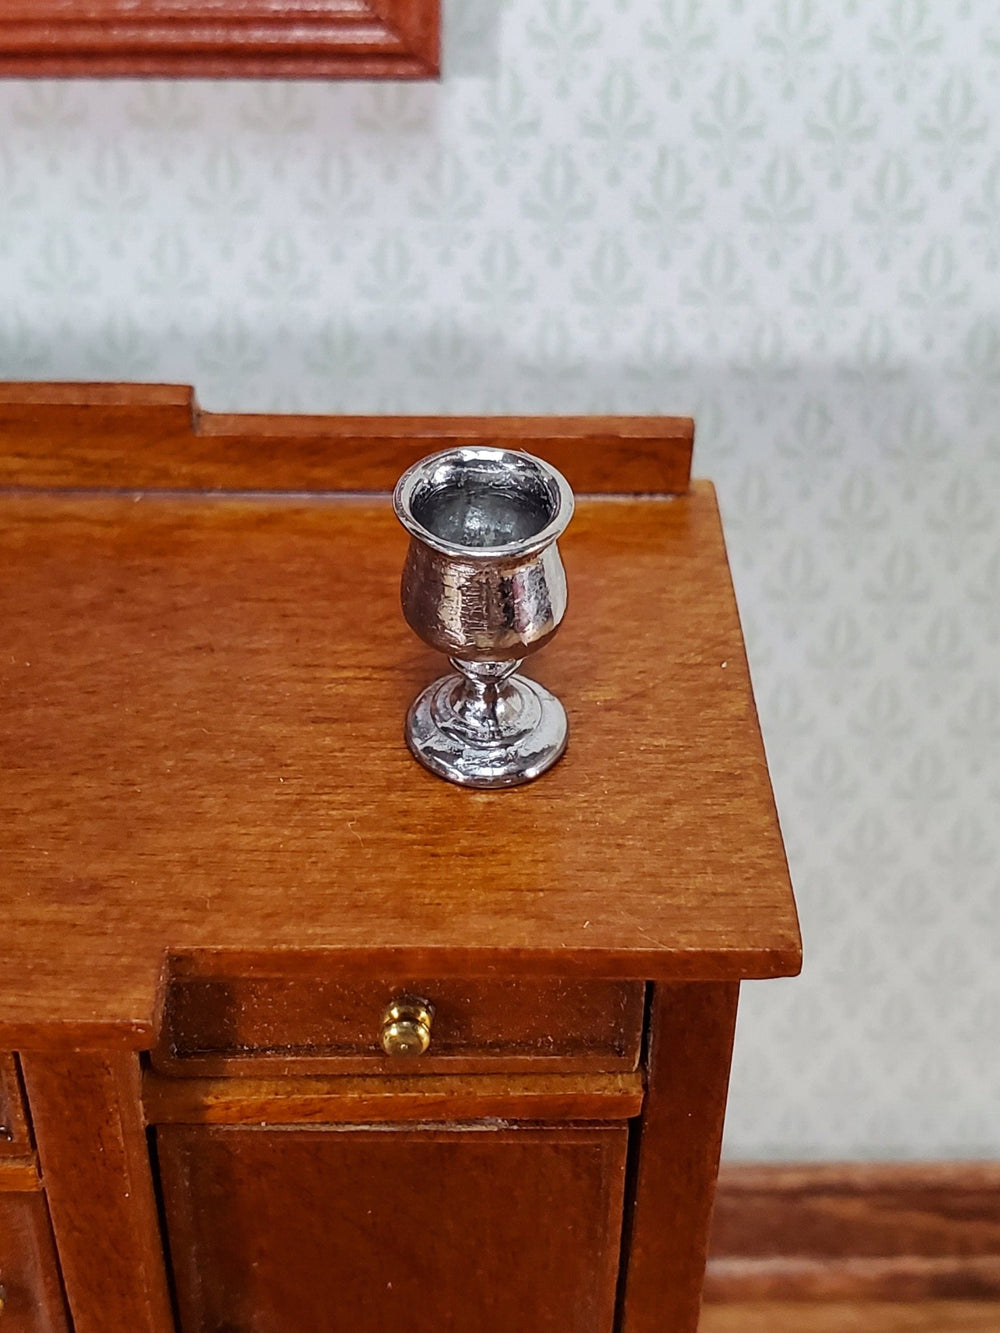 Dollhouse Wine Goblet Polished Metal 1:12 Scale Miniature by Phoenix Model - Miniature Crush